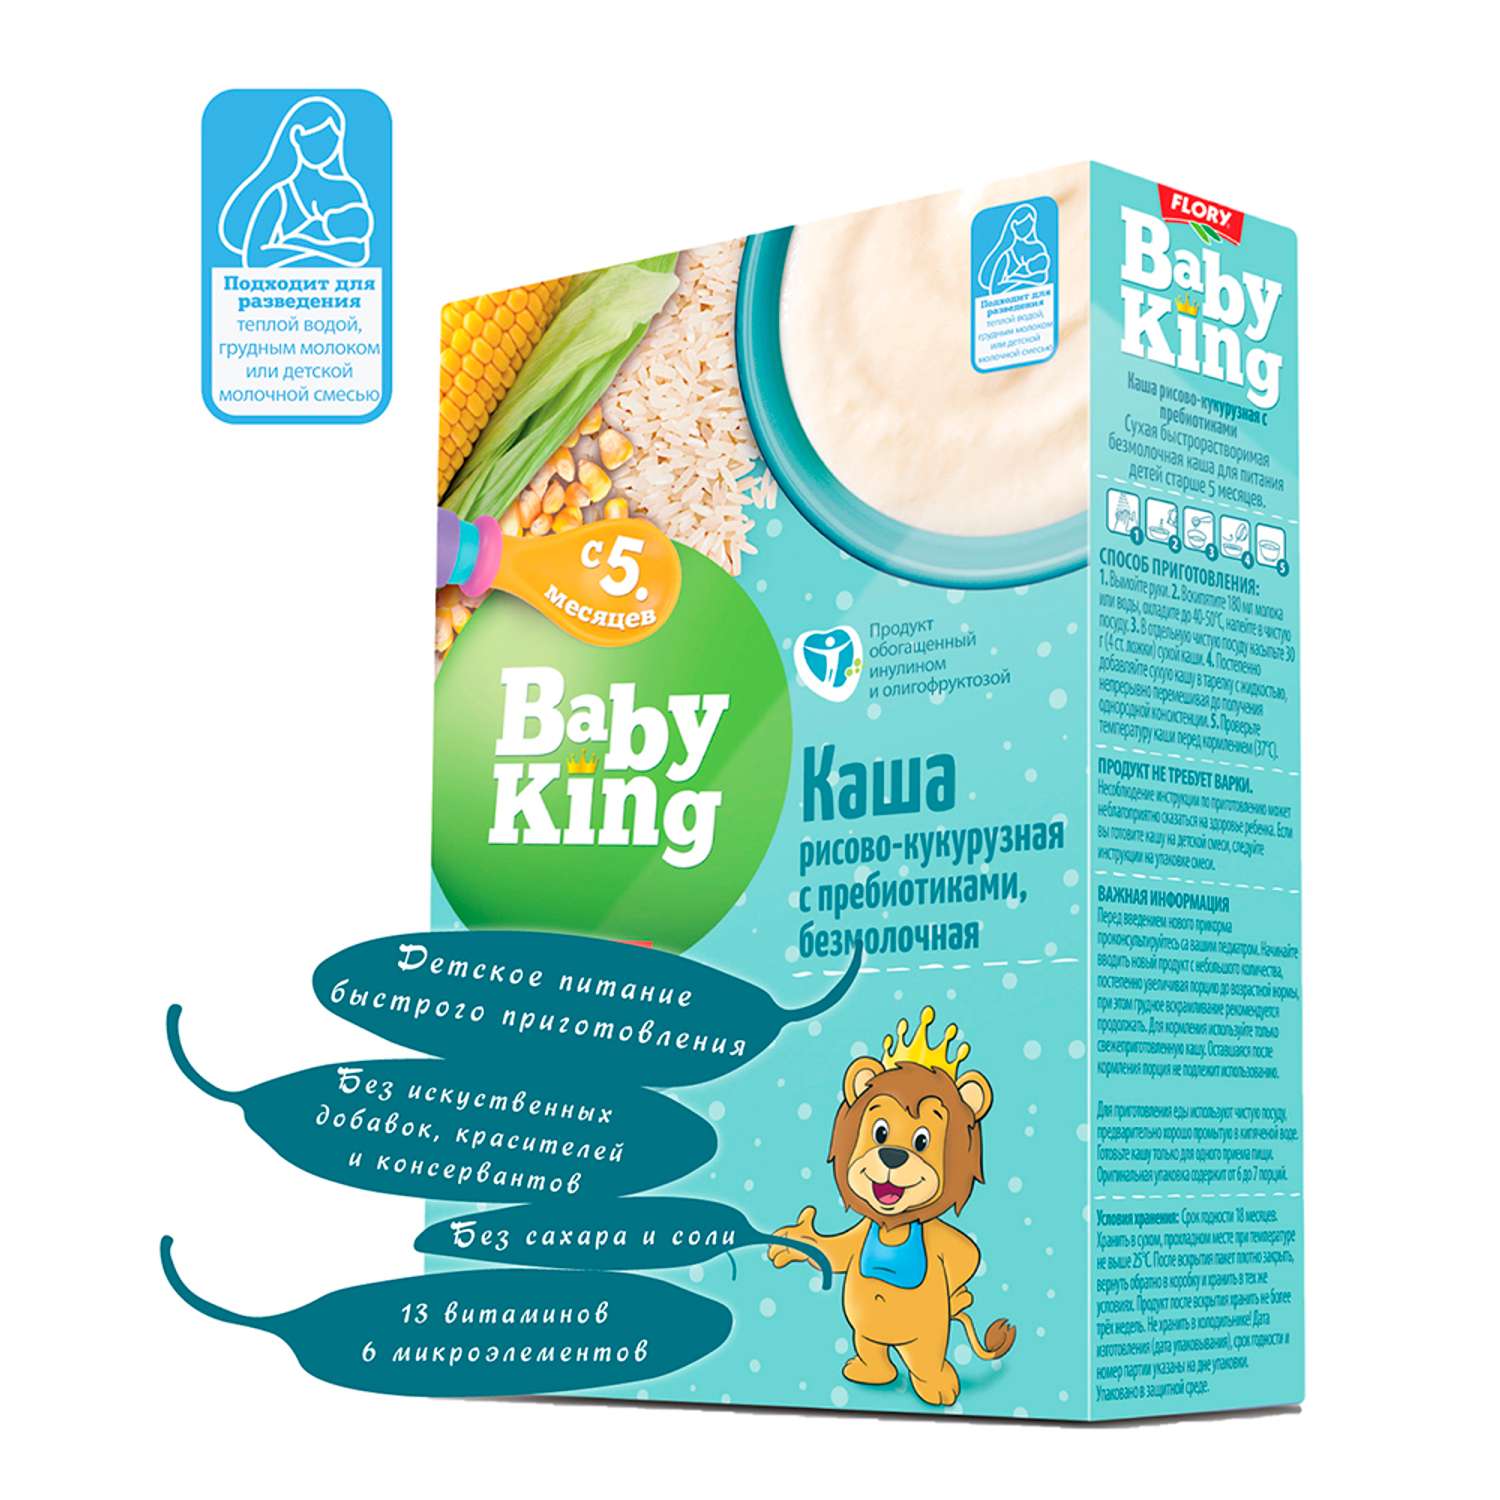 Каша детская Baby King безмолочная рисово-курурузная с пребиотиками 200гр с 5 месяцев - фото 1